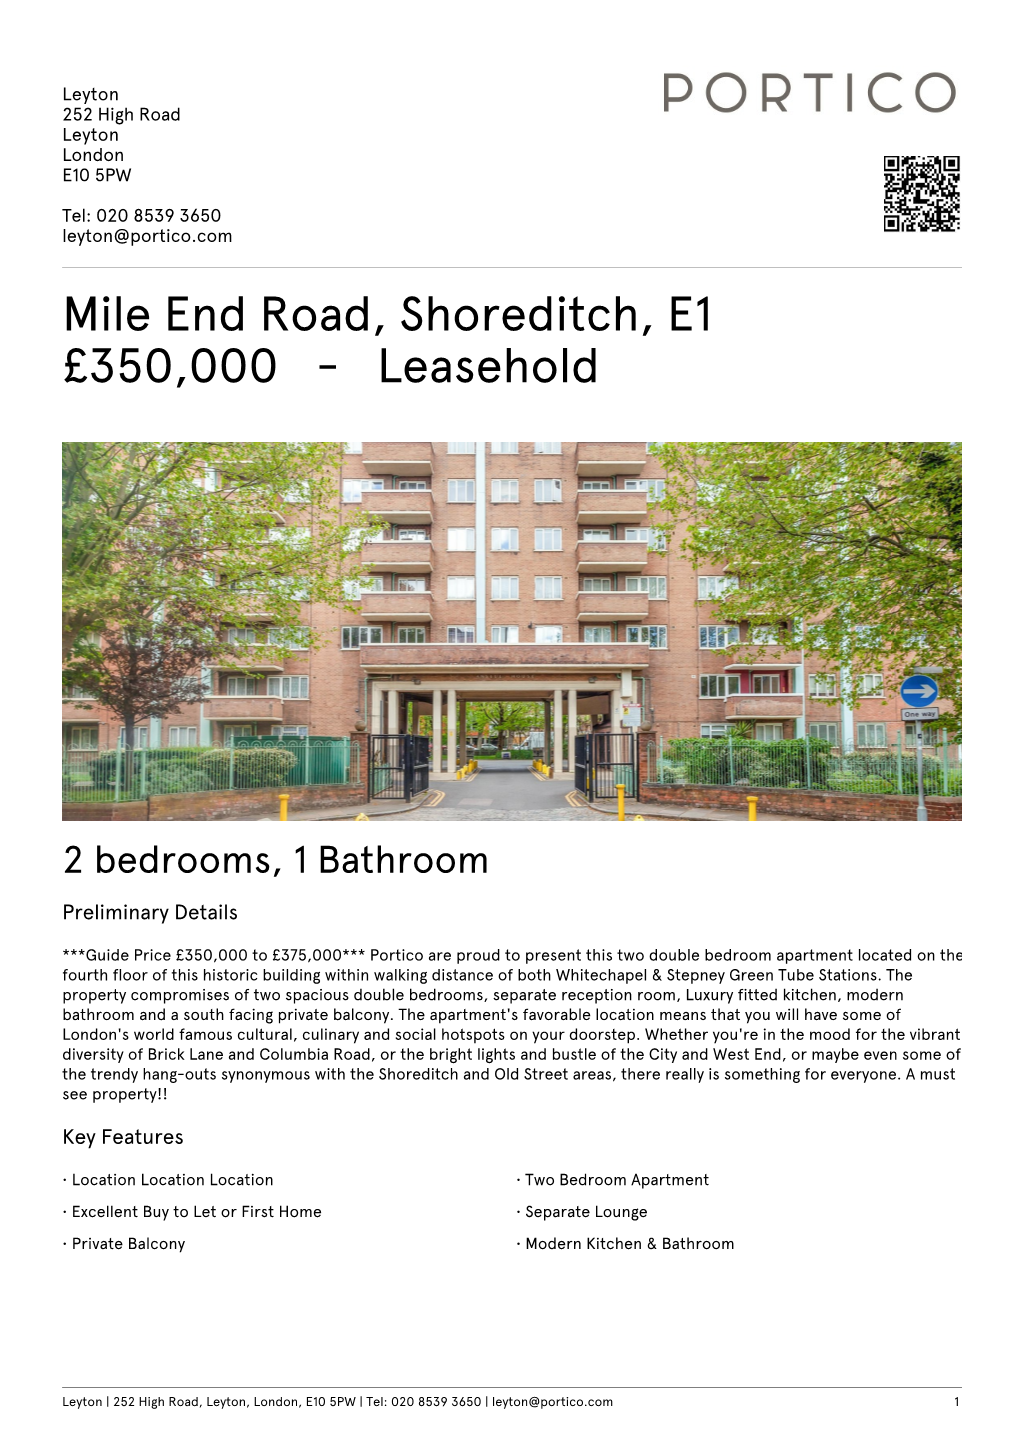 Mile End Road, Shoreditch, E1 £350000